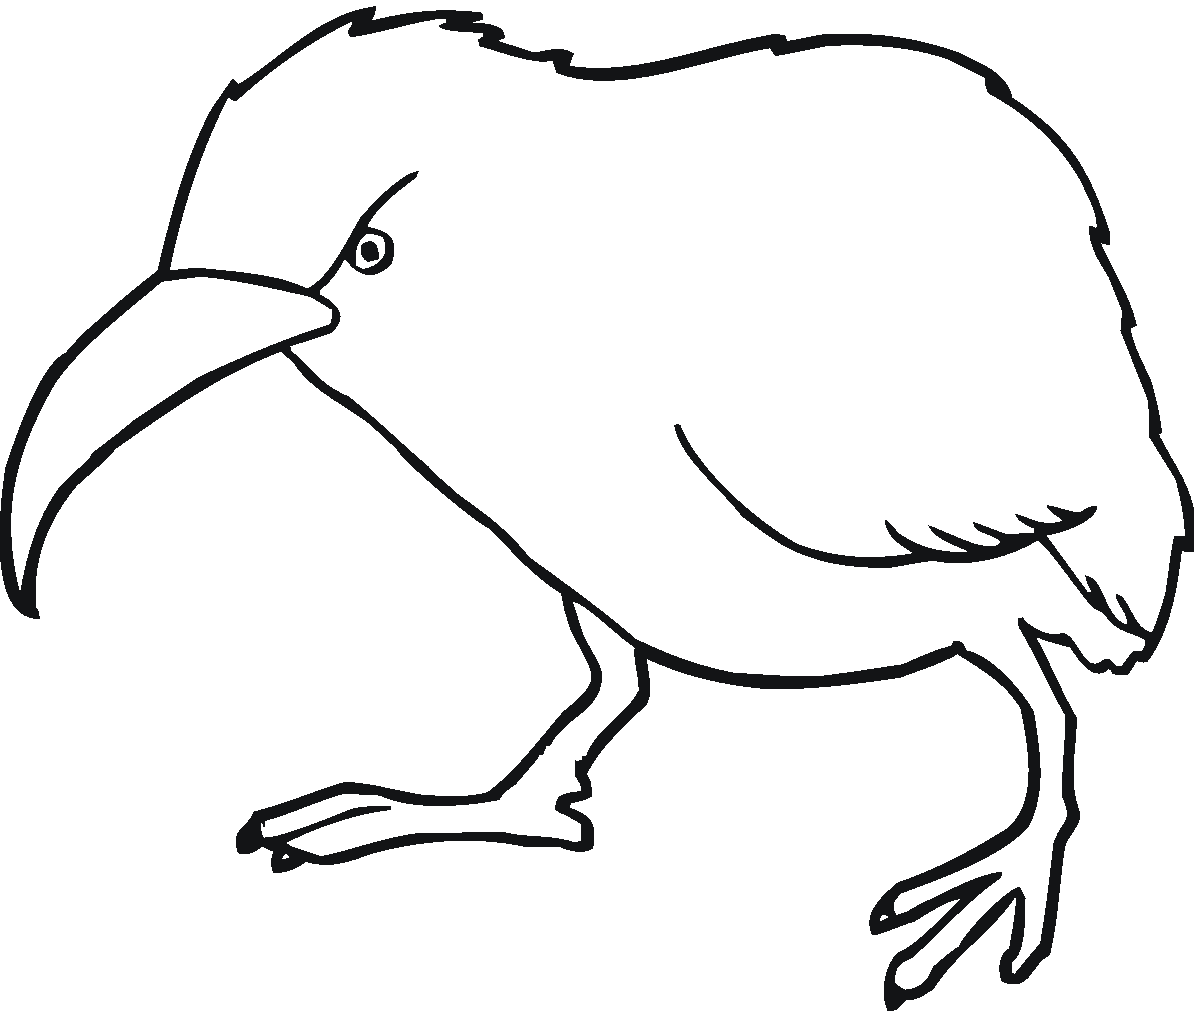 Kiwi Bird Drawing - ClipArt Best